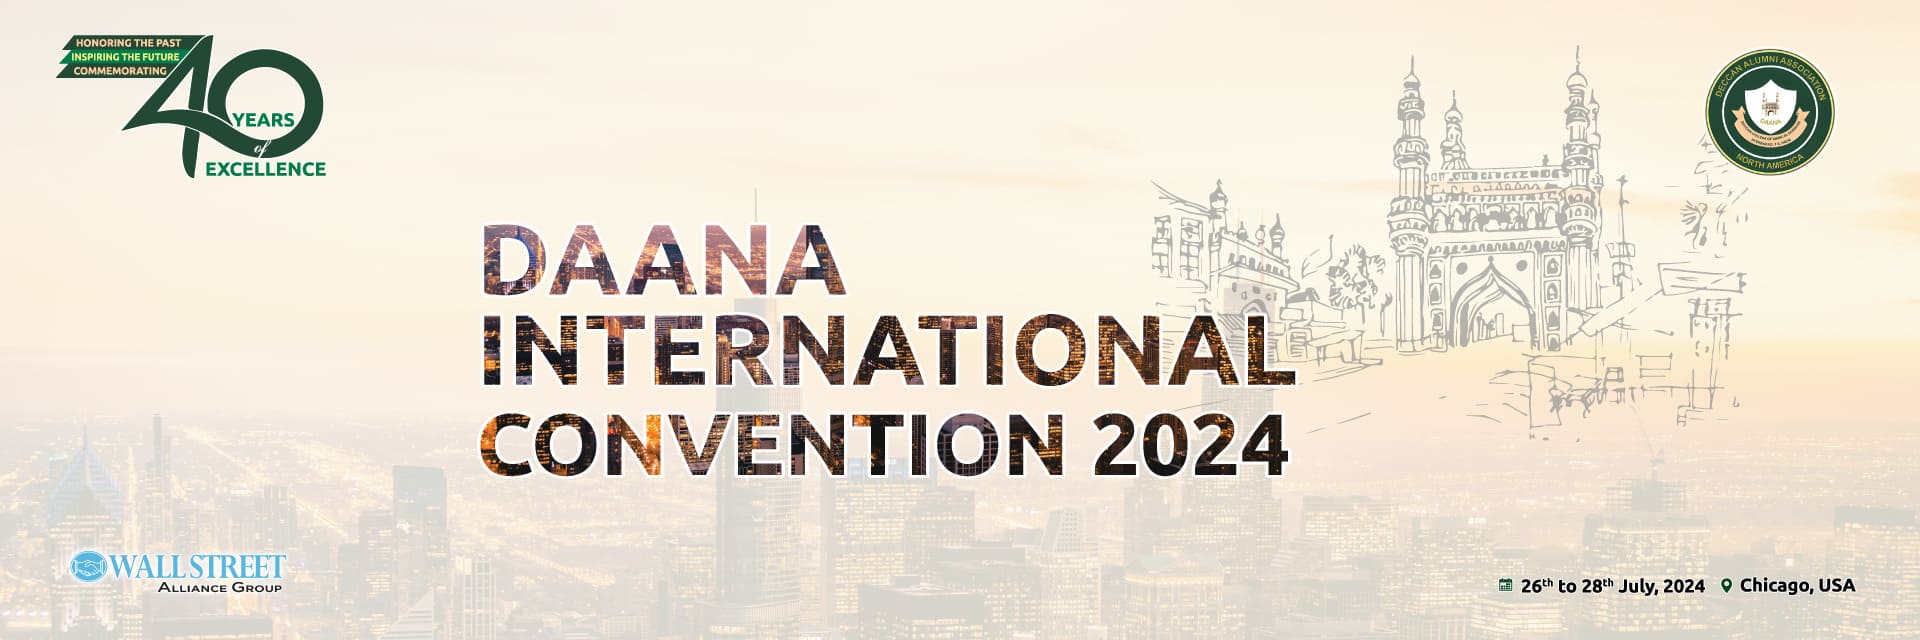 DAANA Convention 2024